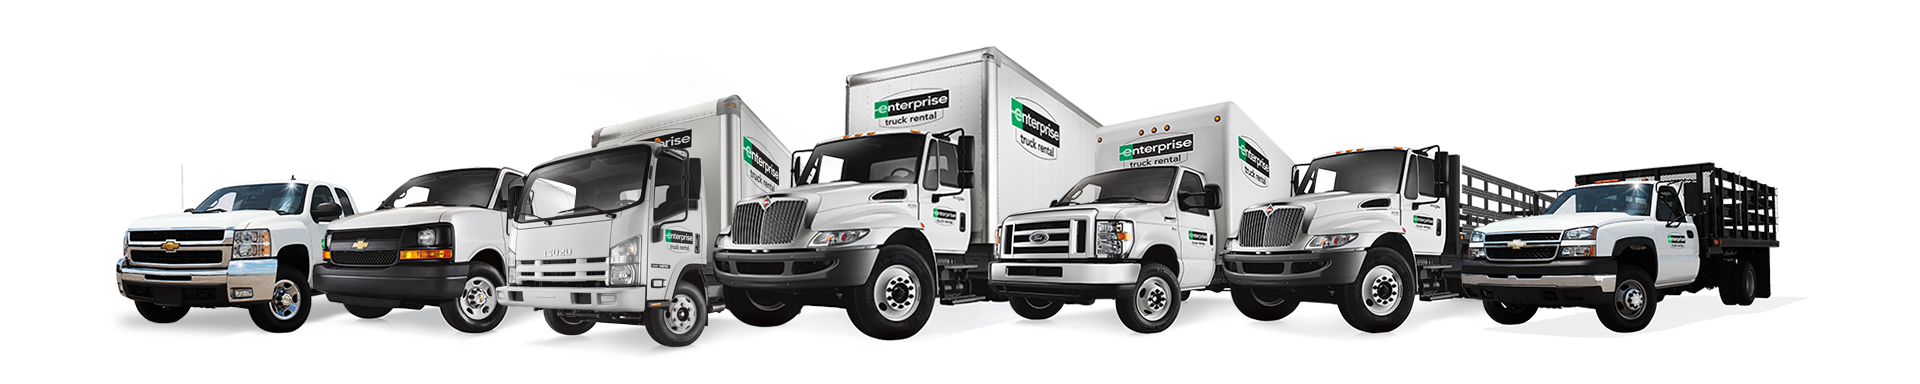 truck rental business grows 